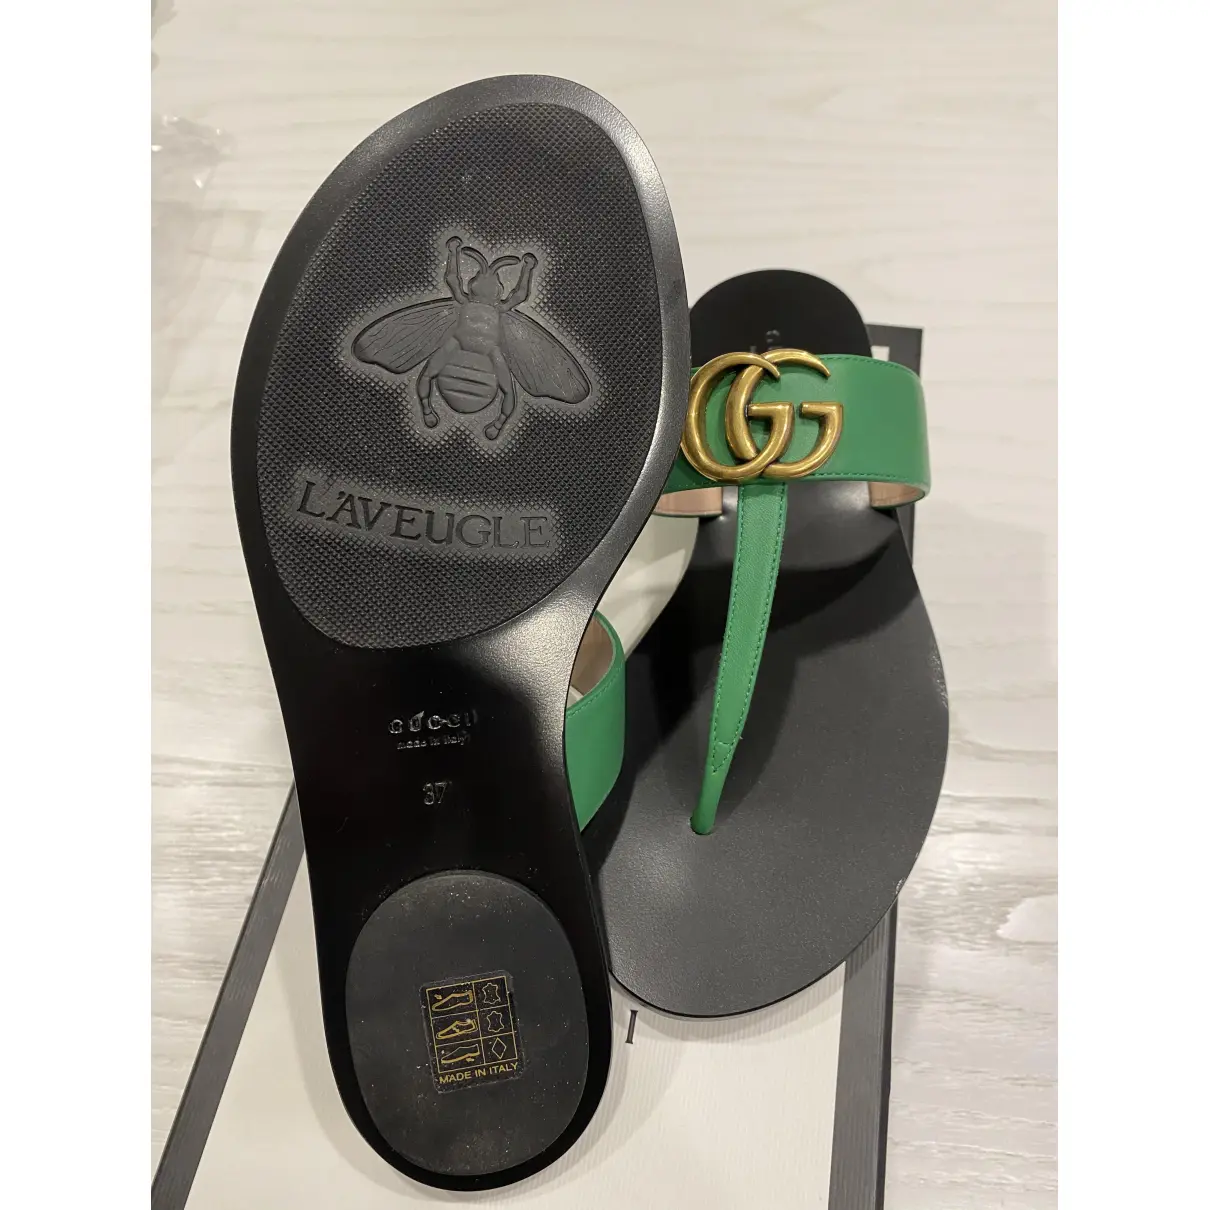 Buy Gucci Double G leather flip flops online